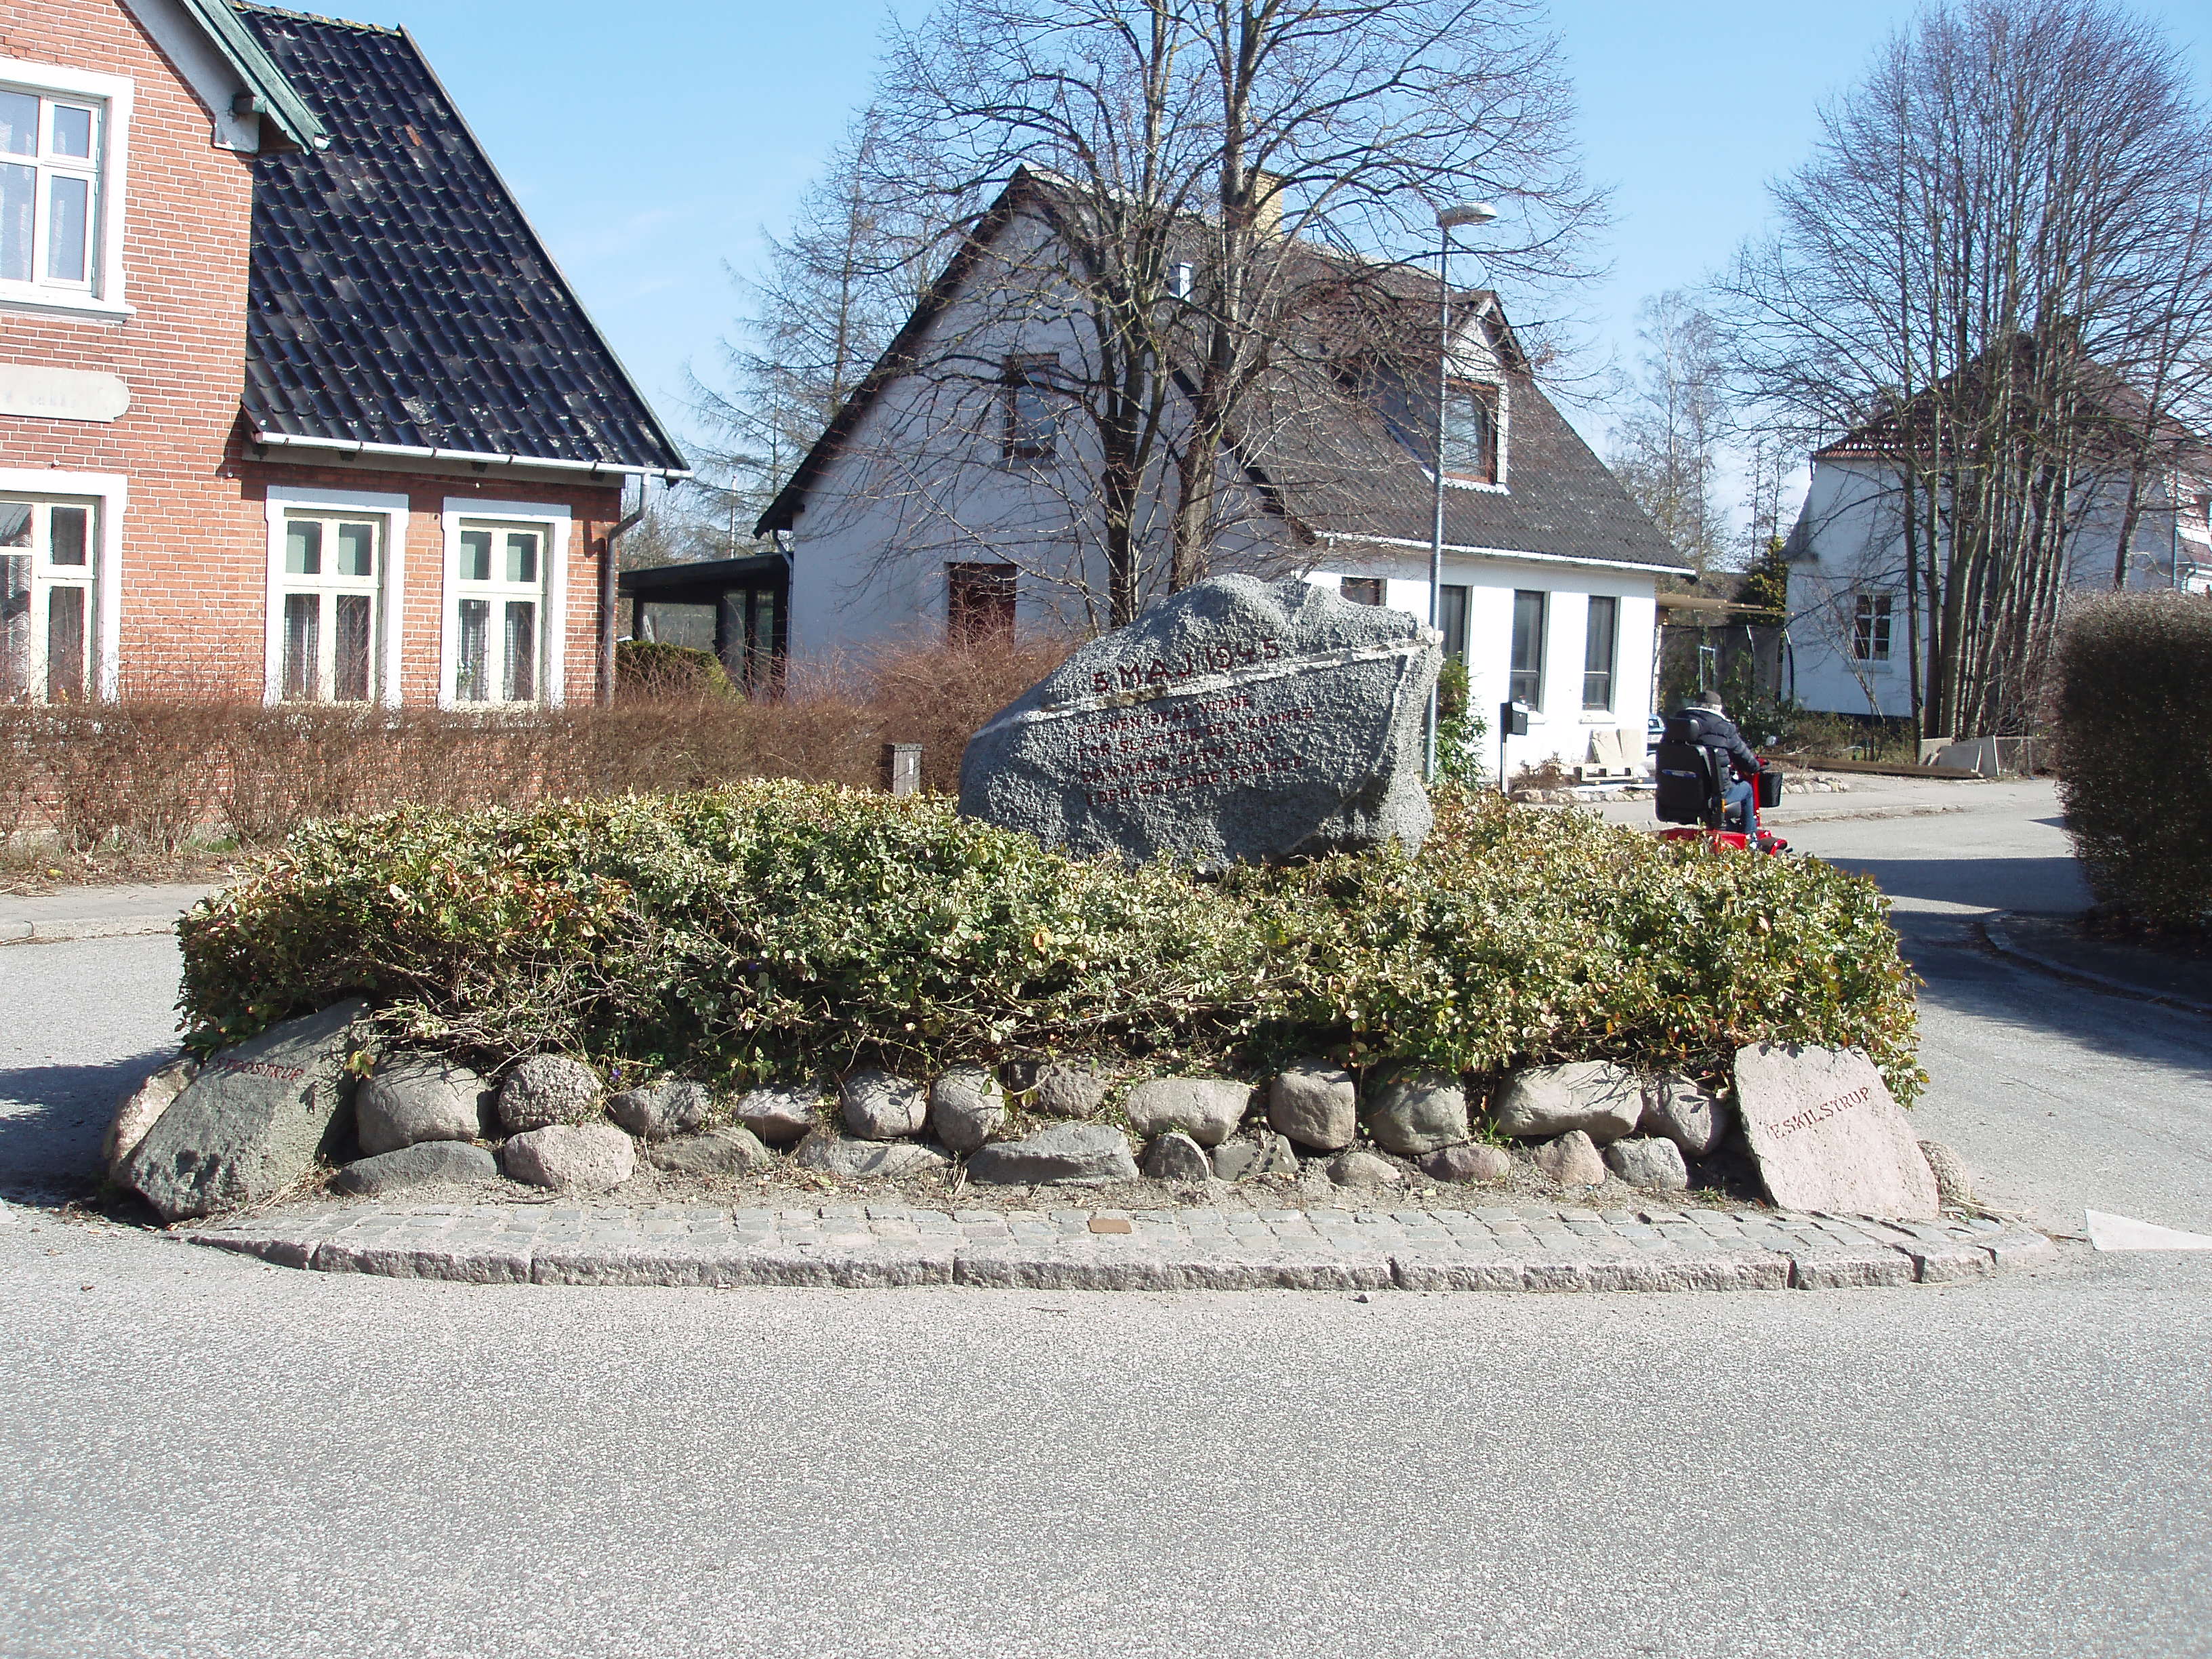 Anlgget med befrielsesstenen i Eskilstrup, Guldborgsund kommune